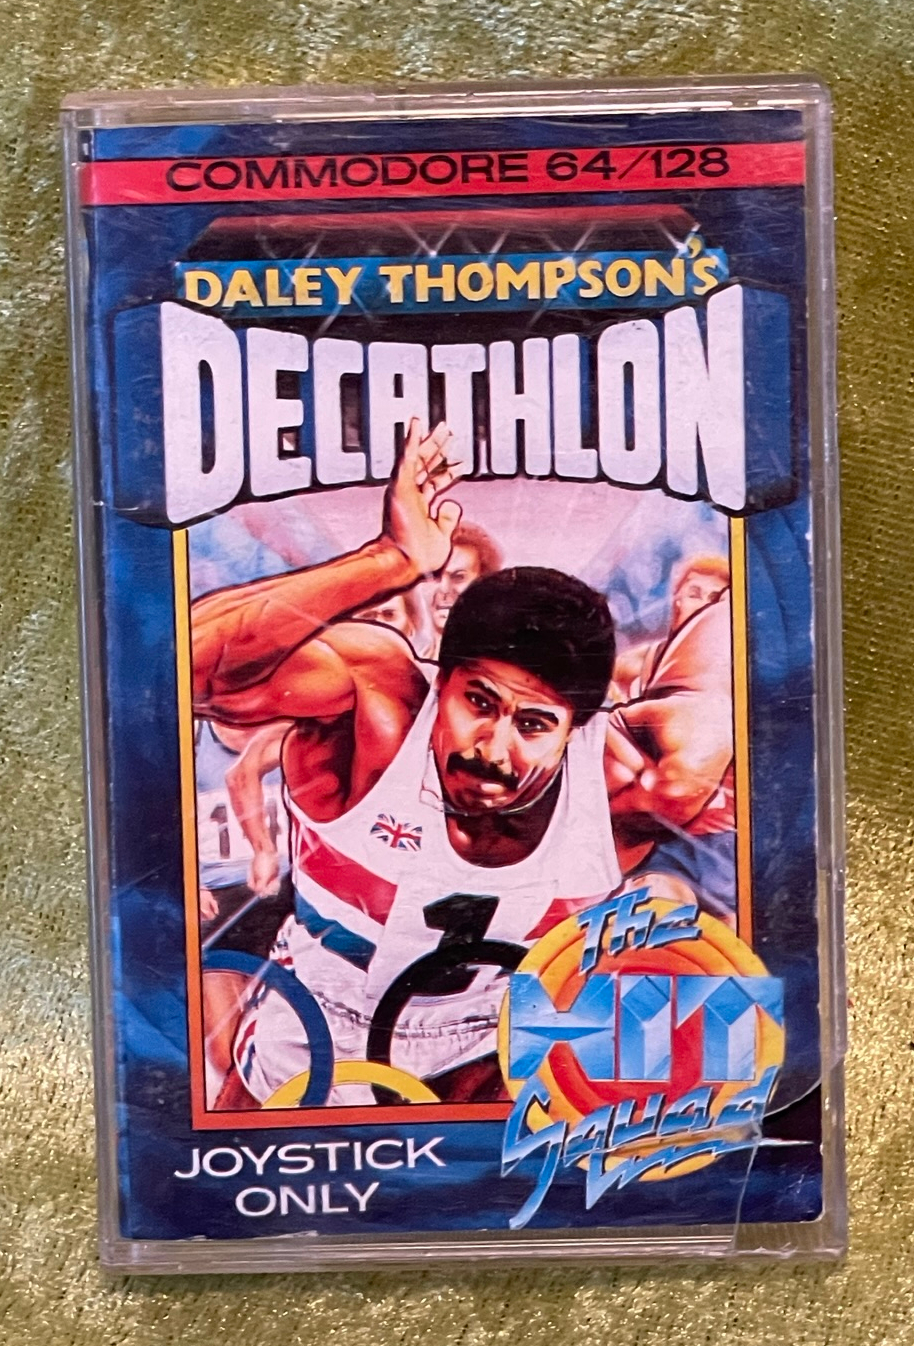 Daley Thompson's